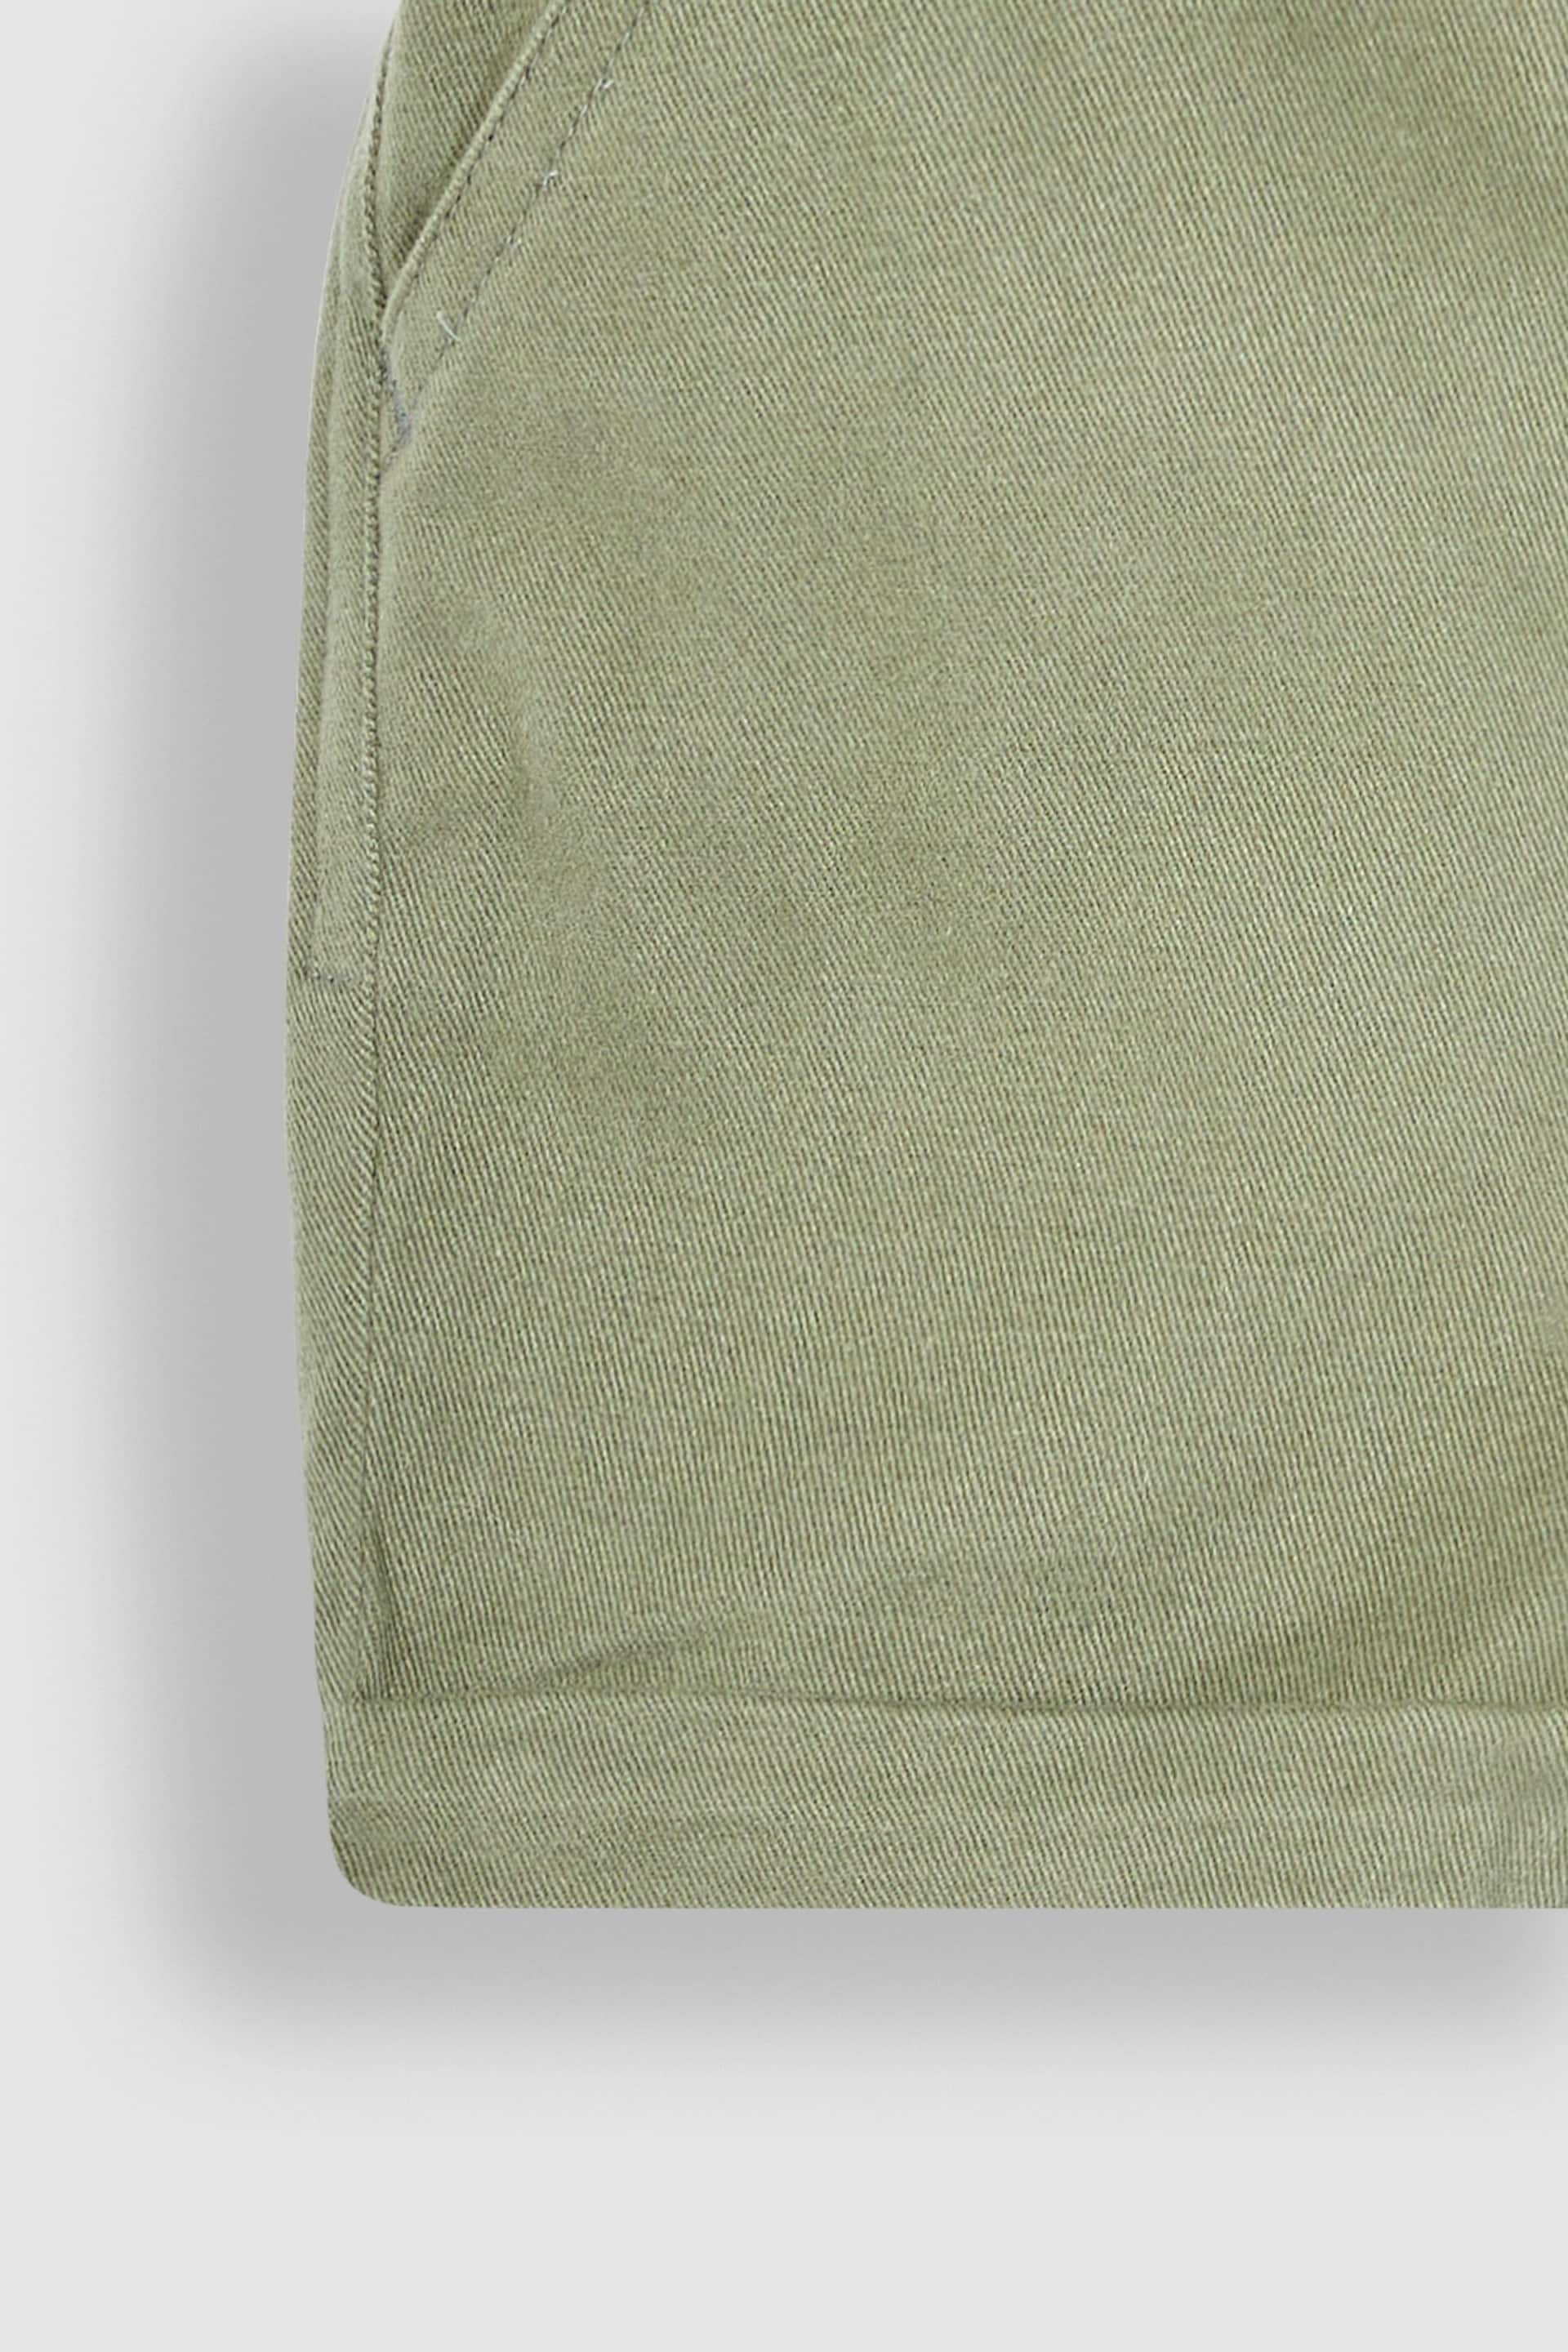 JoJo Maman Bébé Khaki Green Twill Chino Shorts - Image 2 of 3